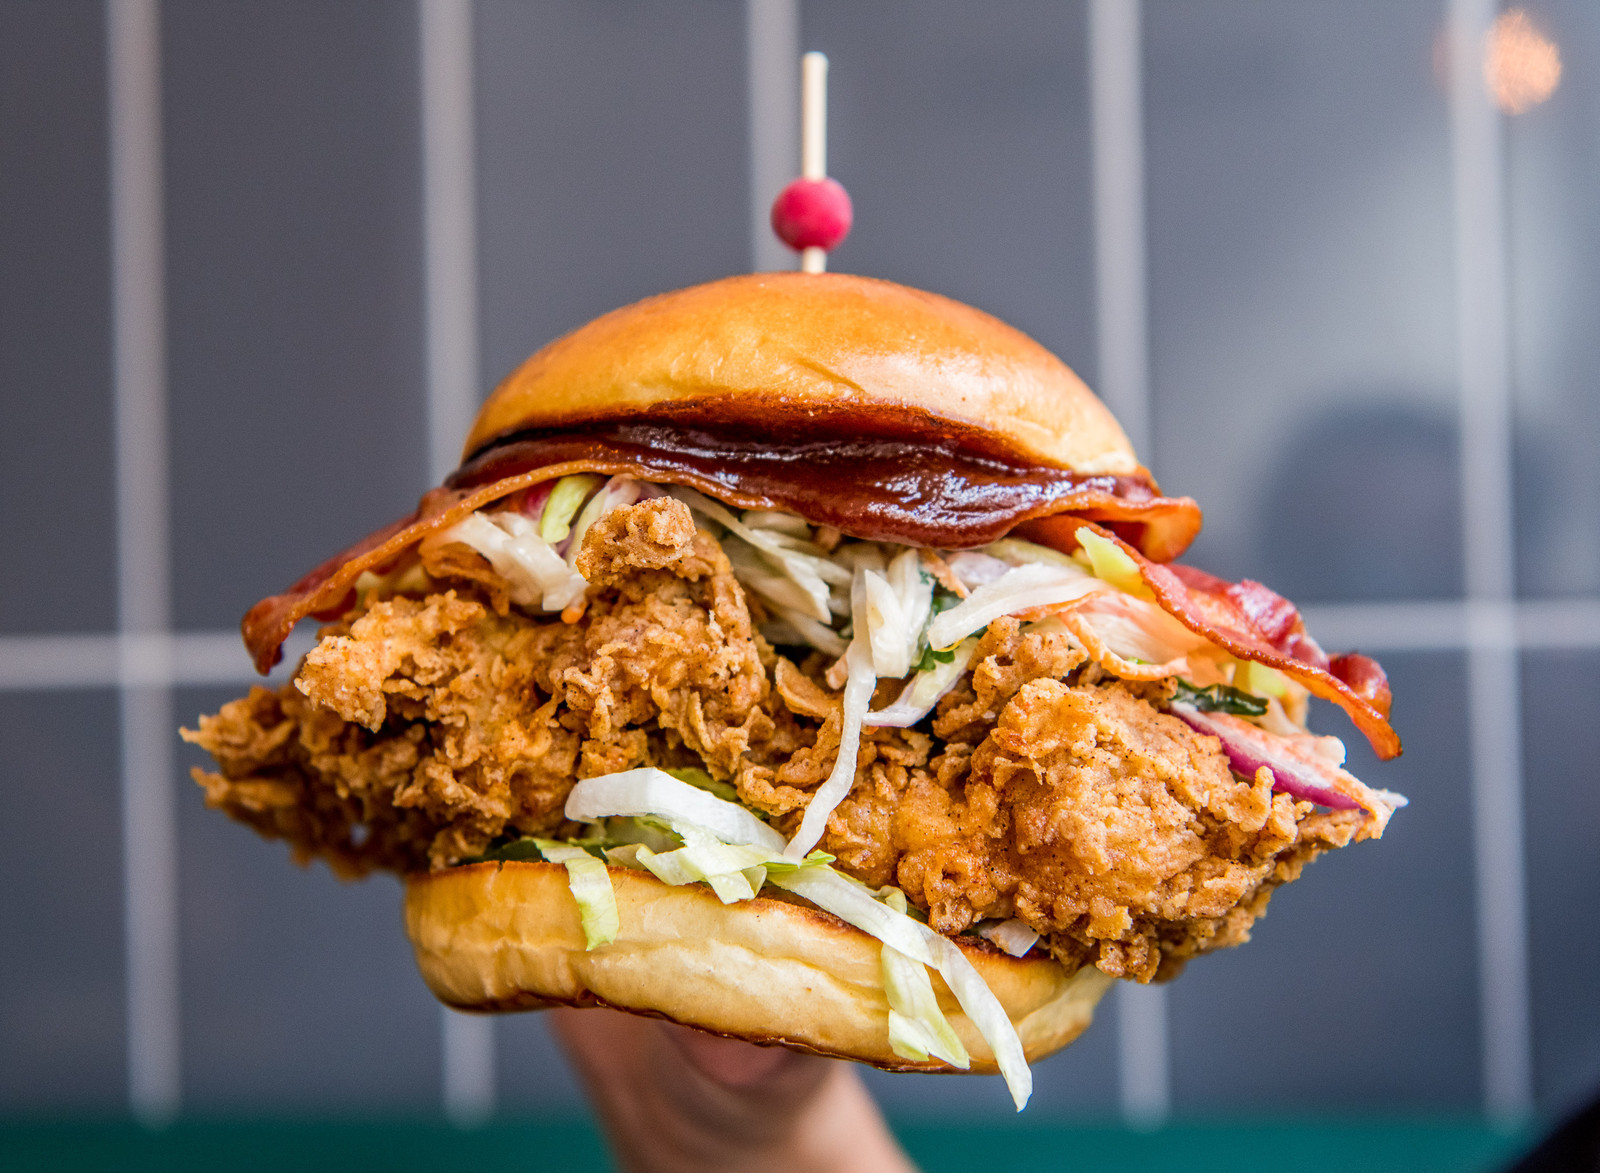 Mahiki nightclub in Kensington puts Butchies fried chicken sandwiches on the menu